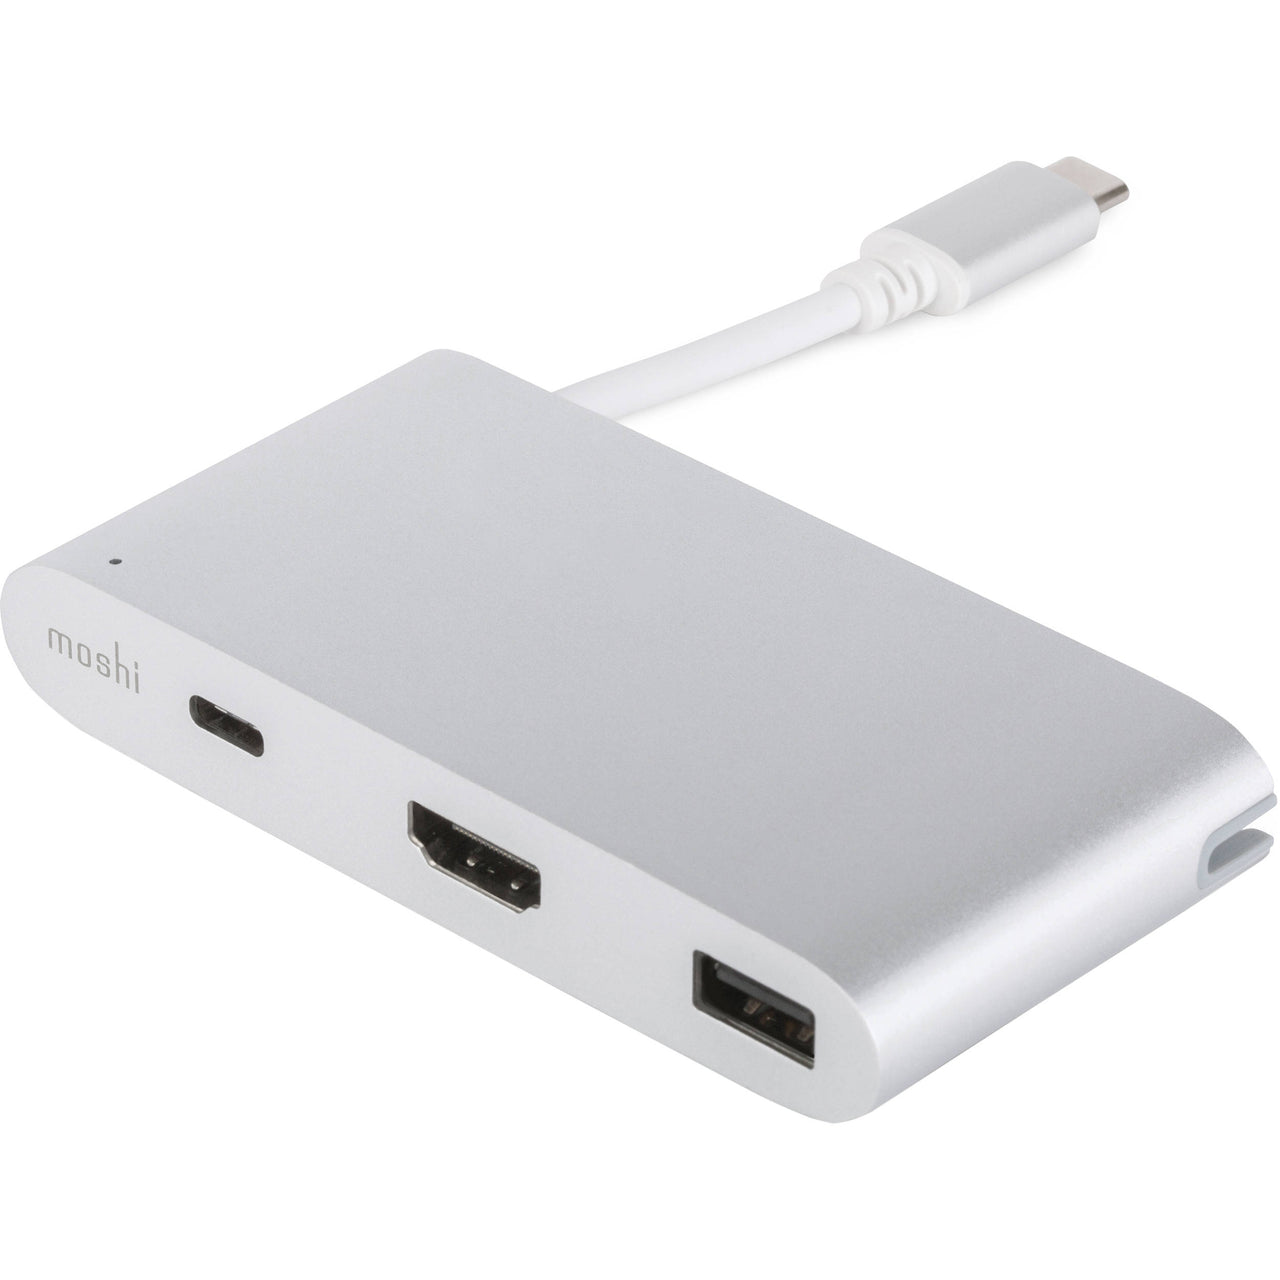 MOSHI USB-C Multiport Adapter/Hub (Silver)